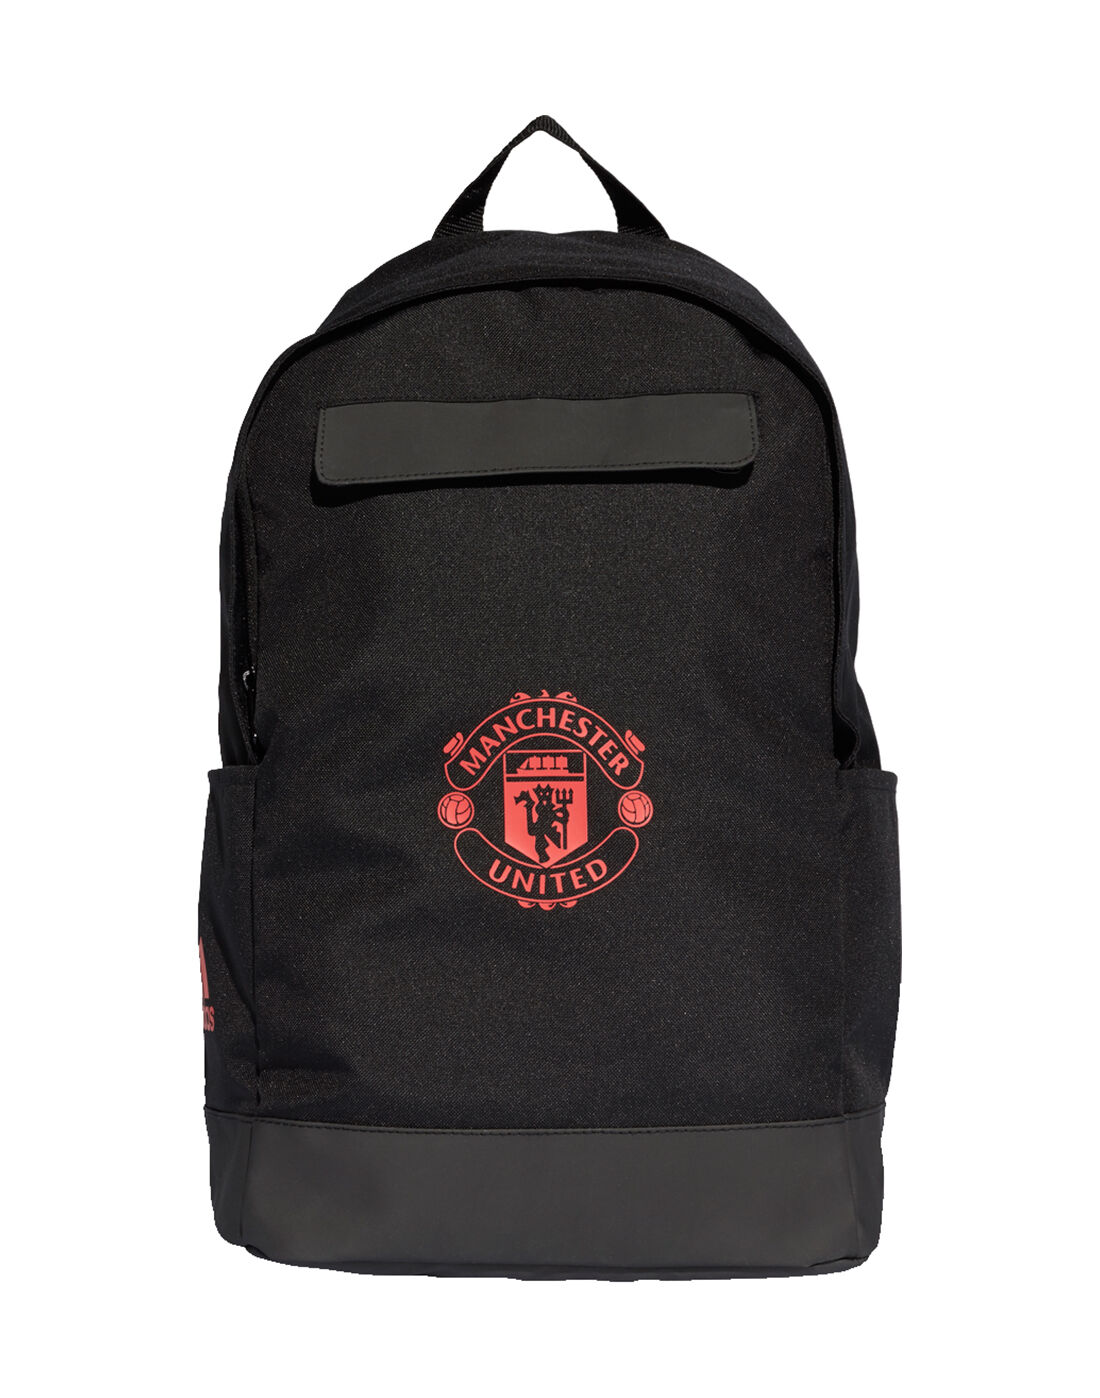 Manchester United Football Club Junior Backpack School Sports Bag Free UK PP 